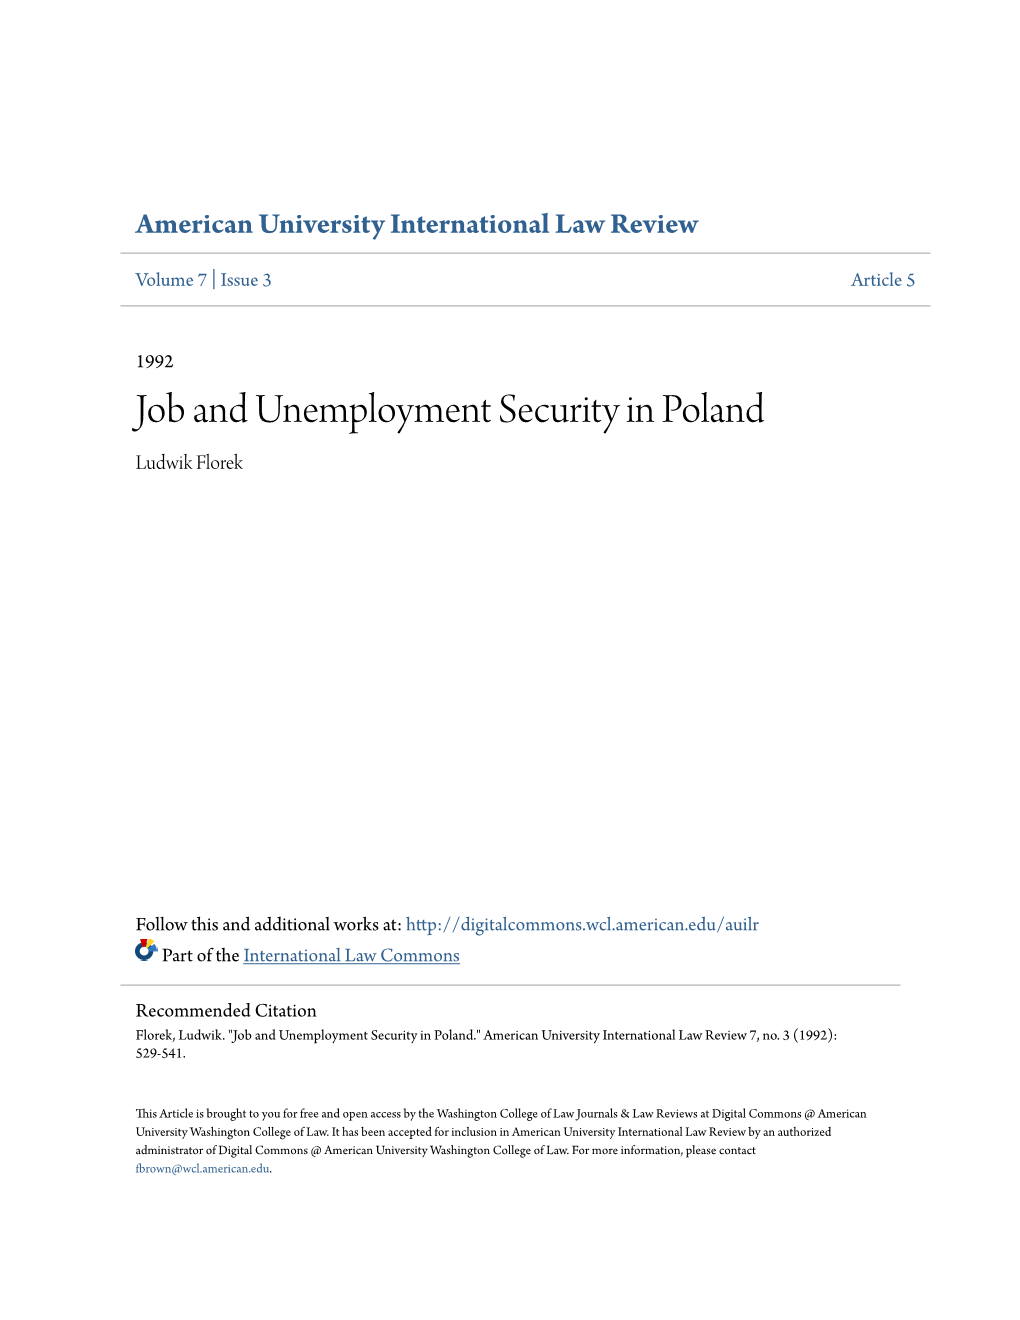 Job and Unemployment Security in Poland Ludwik Florek